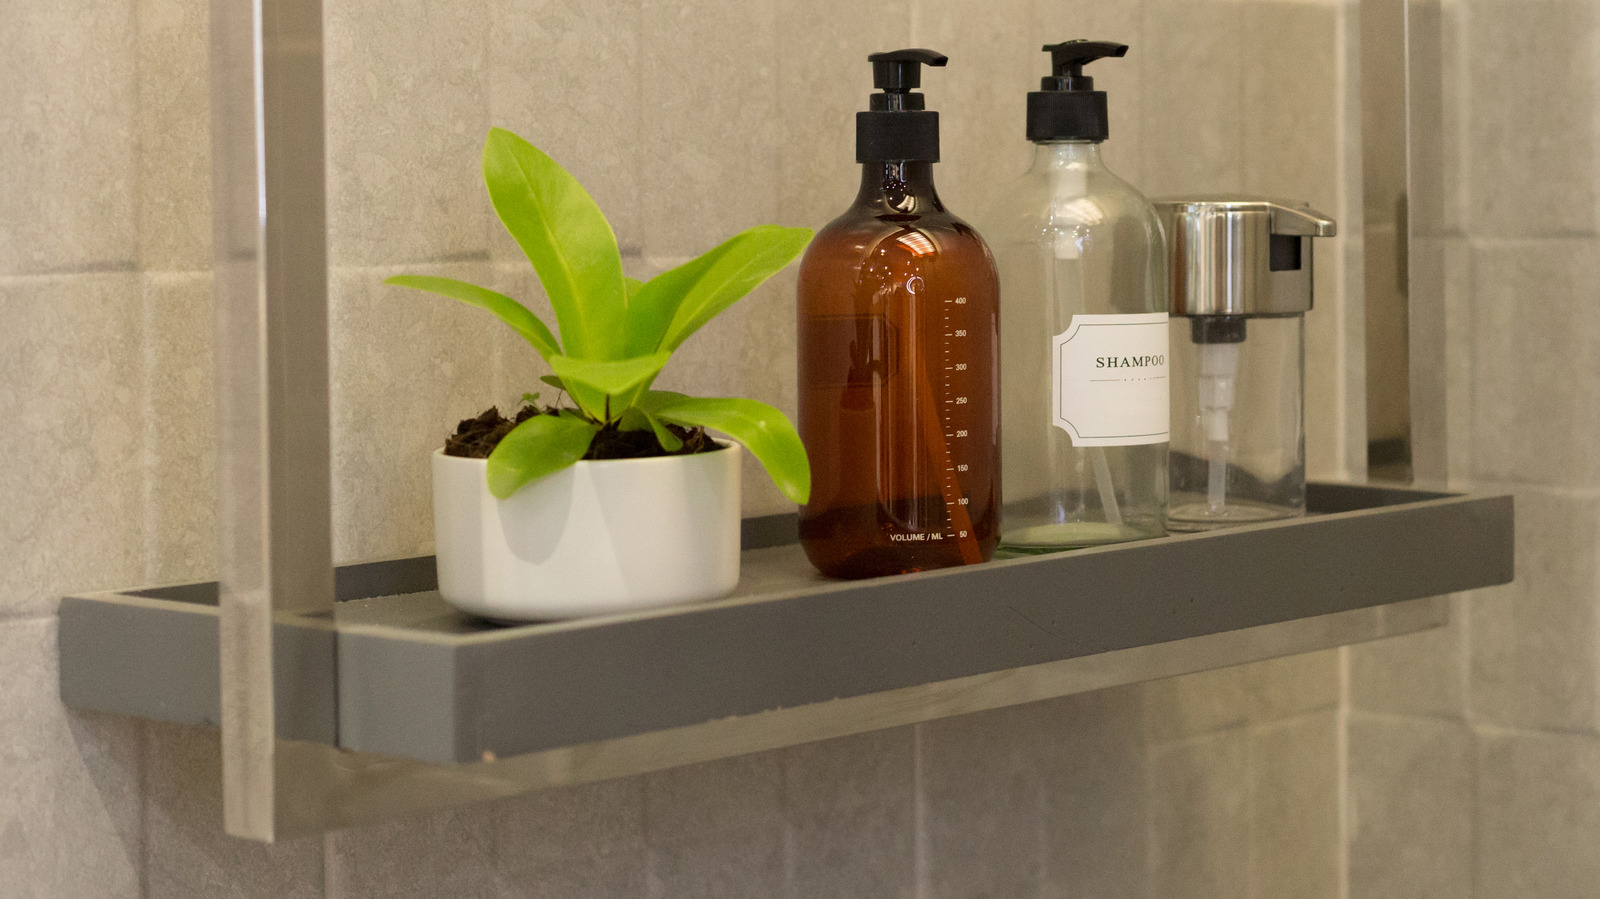 Minimalist Black Bathroom Shelf, White Shower Shelf, Modern Metal Wall Shelf,  Modern Bathroom Accessories 